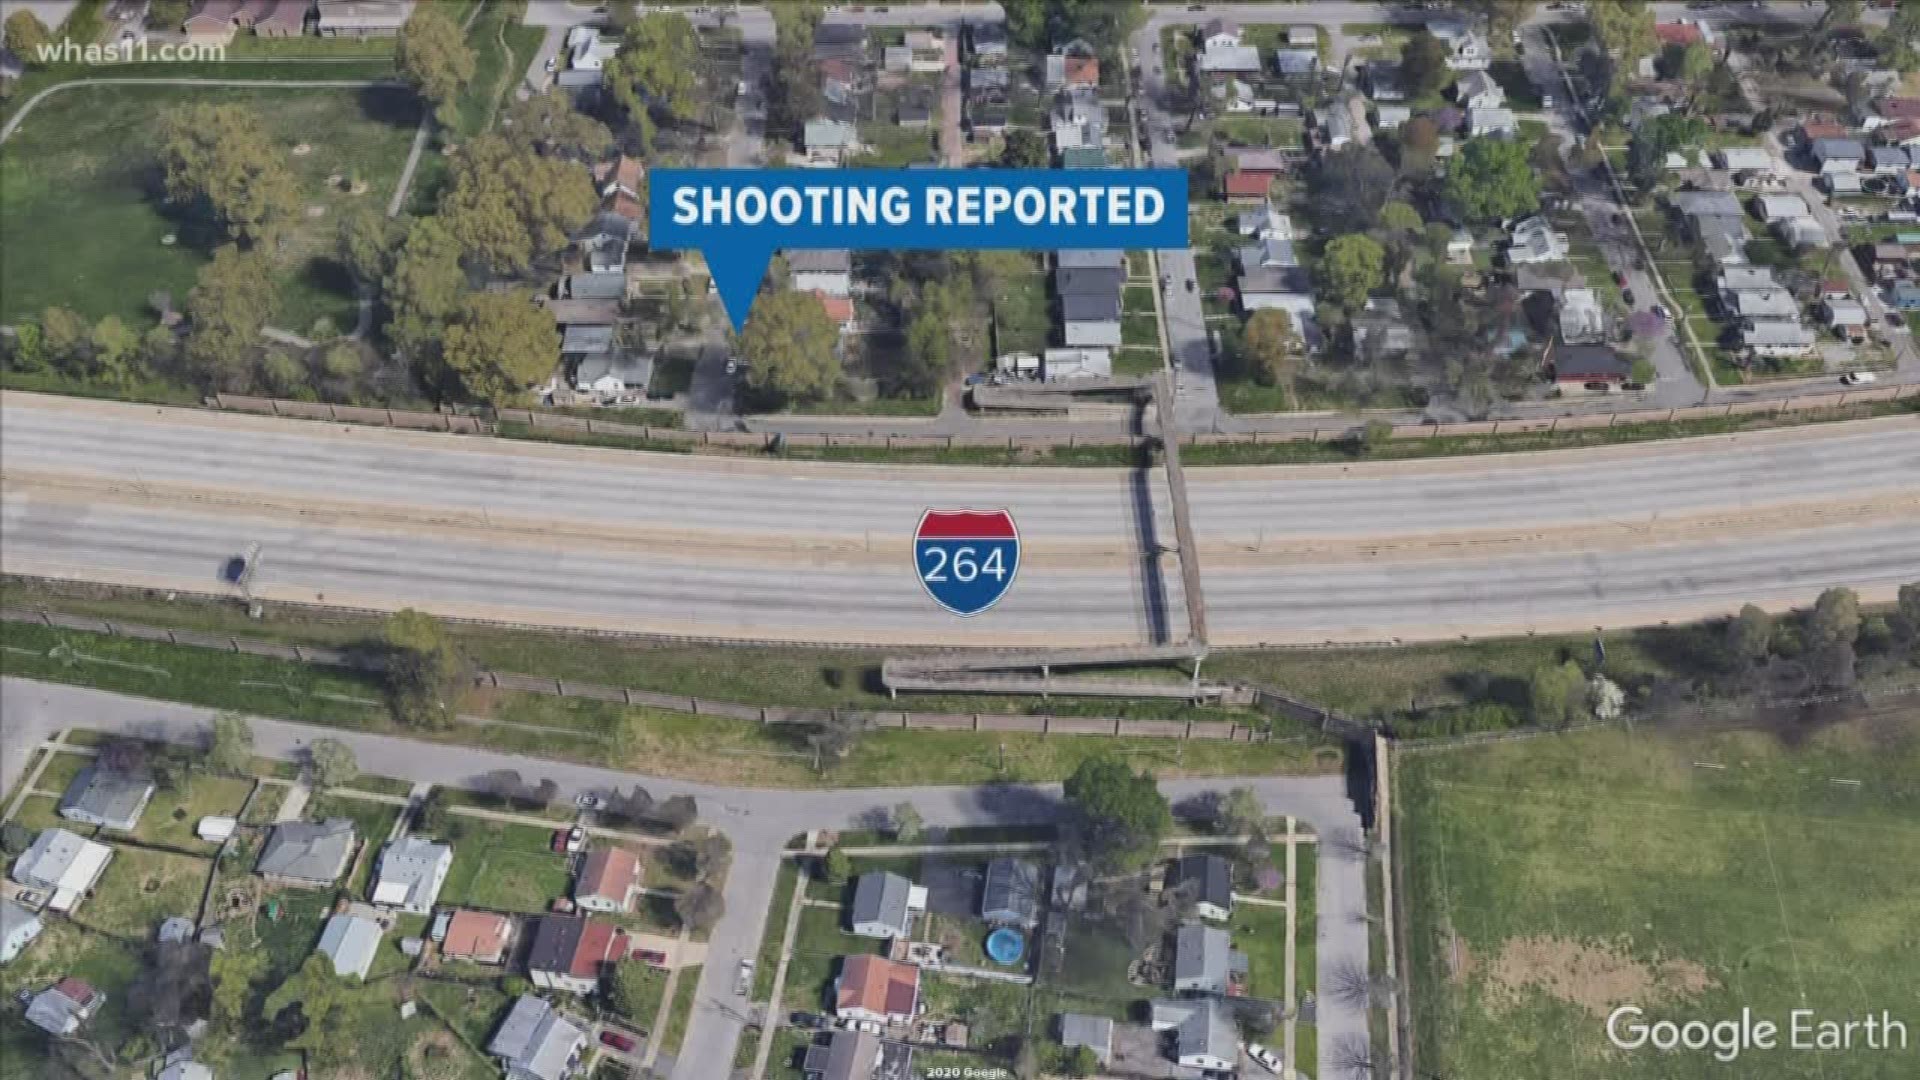 The shooting happened near Wyandotte Park.